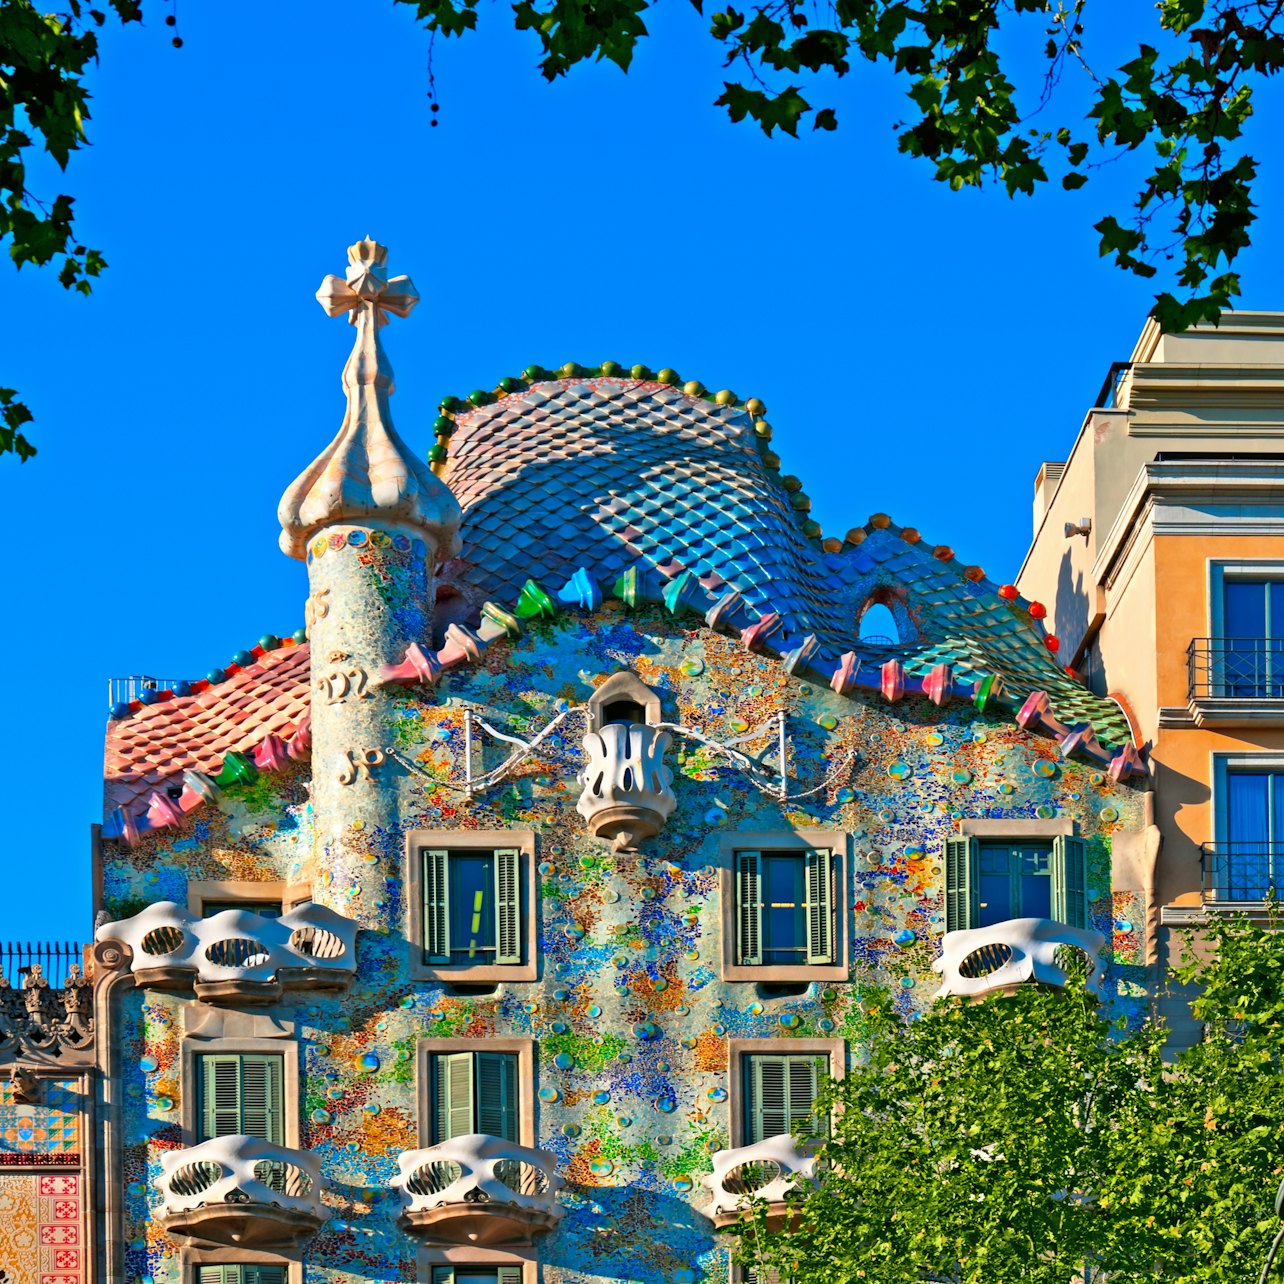 Casa Batlló: Standard Entrance Ticket (Blue) - Accommodations in Barcelona